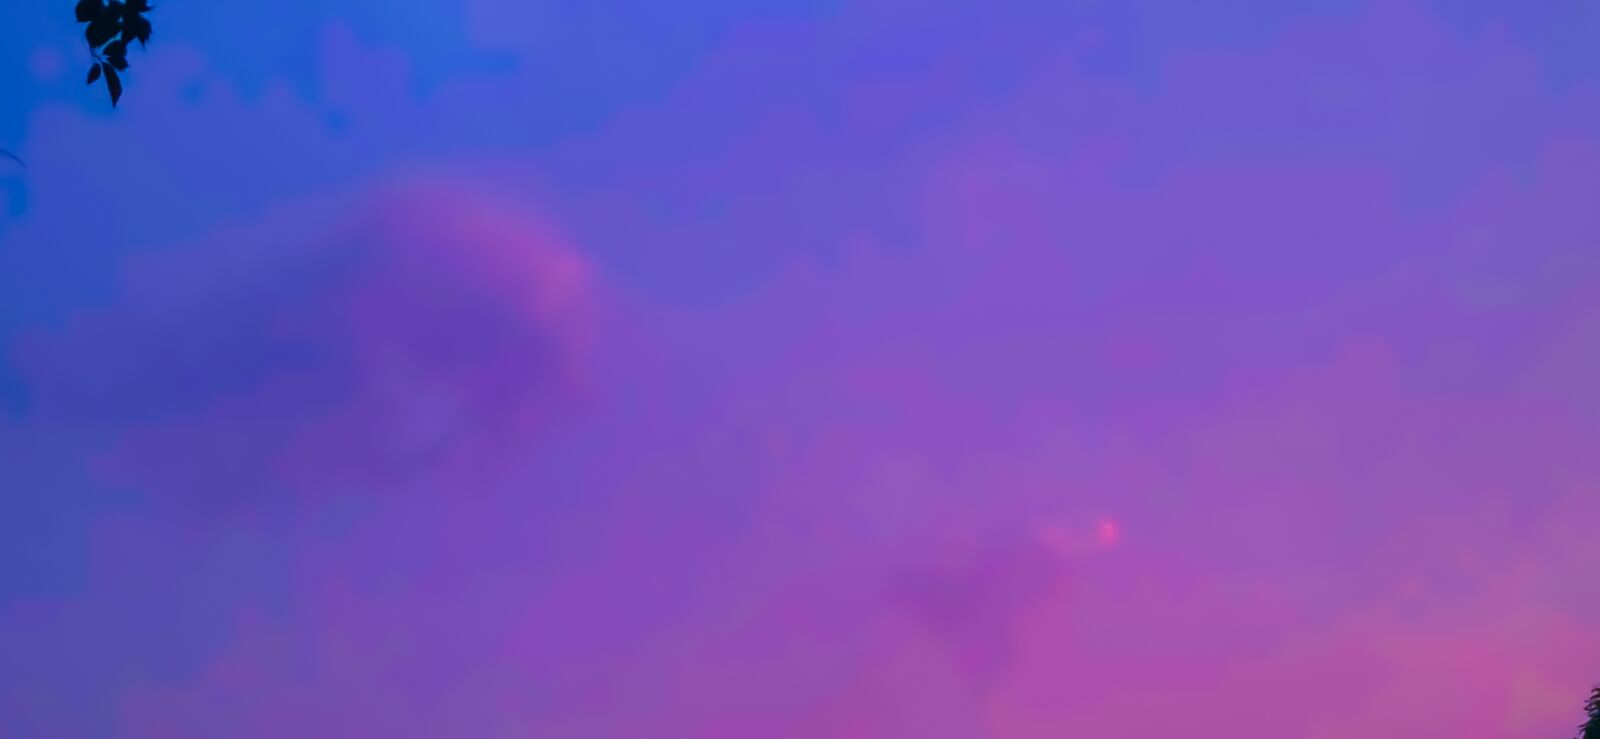 Samsung Galaxy A9 Pro sample photo. Sky, sunset, purple sky photography